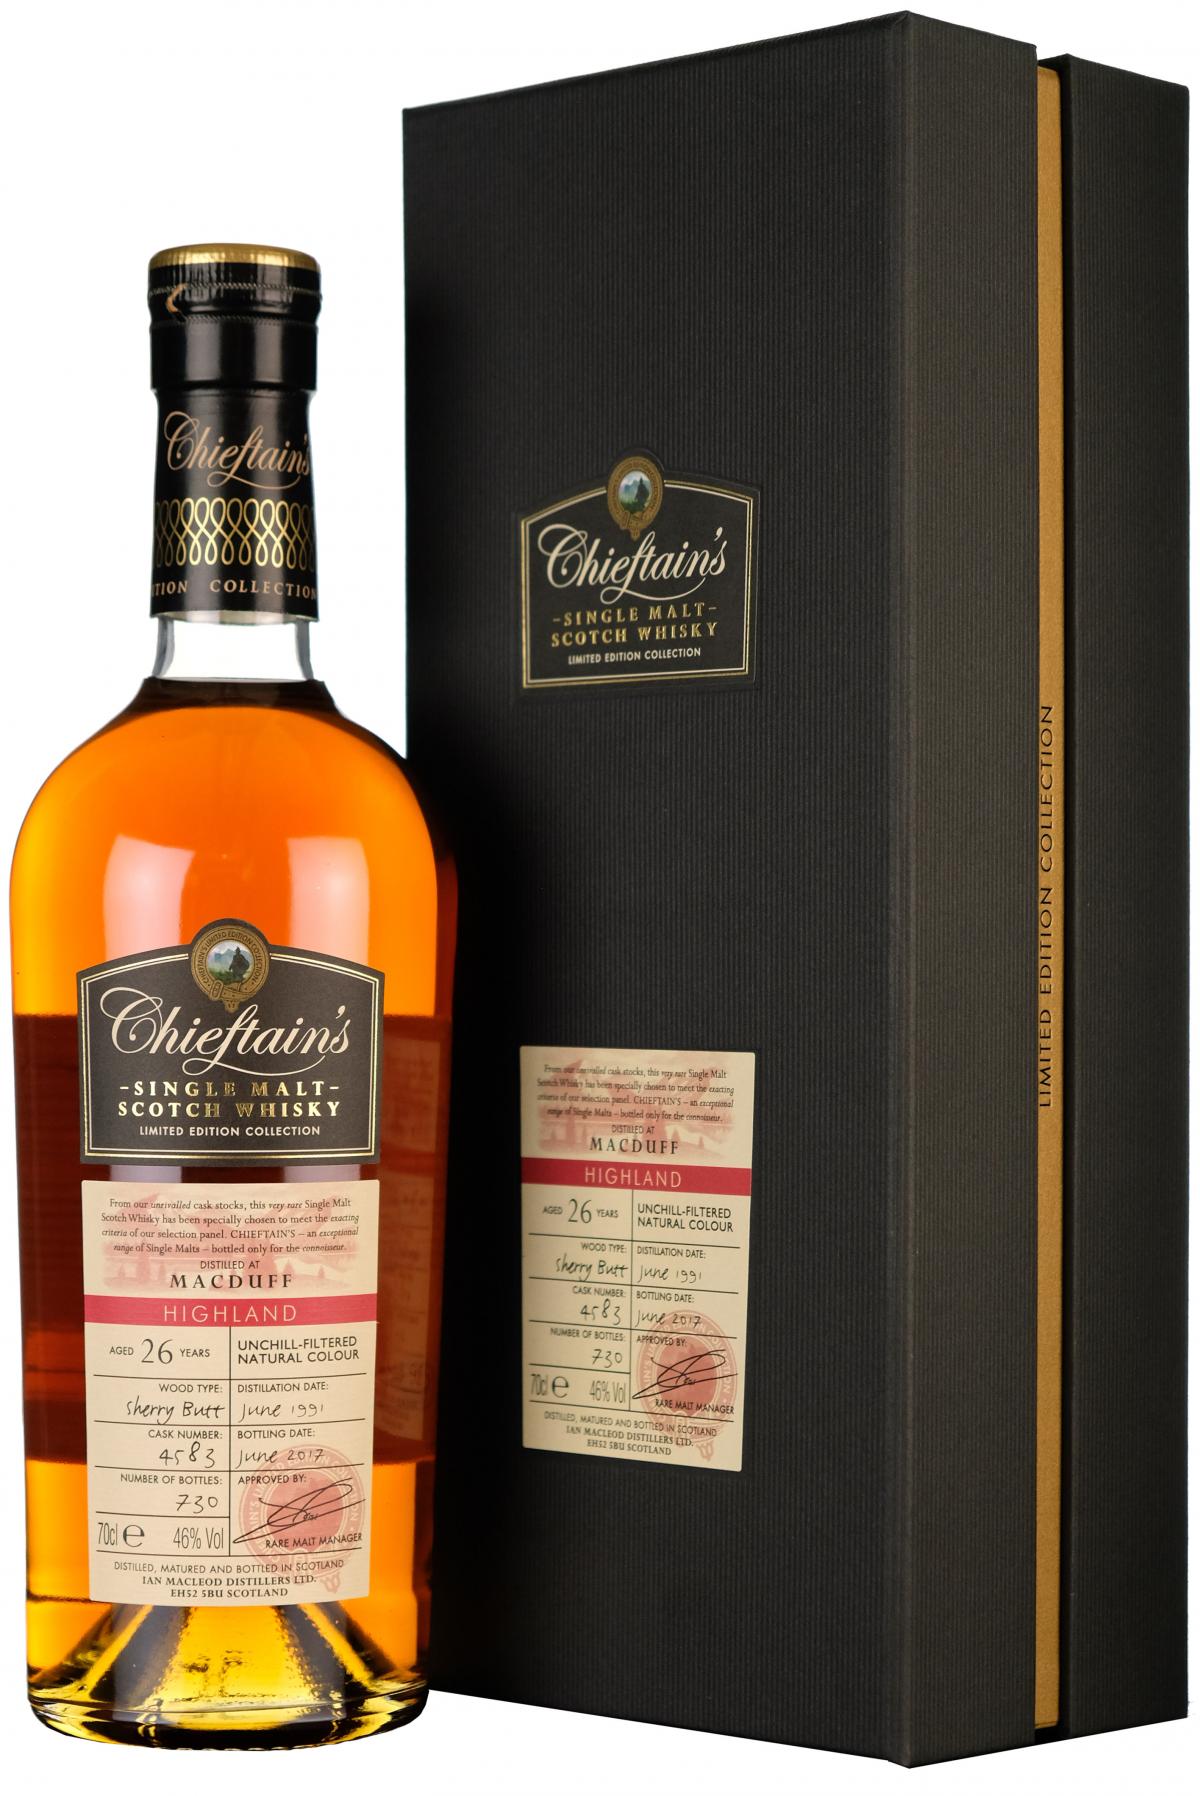 macduff 26 year old chieftains single cask highland single malt scotch whisky whiskey